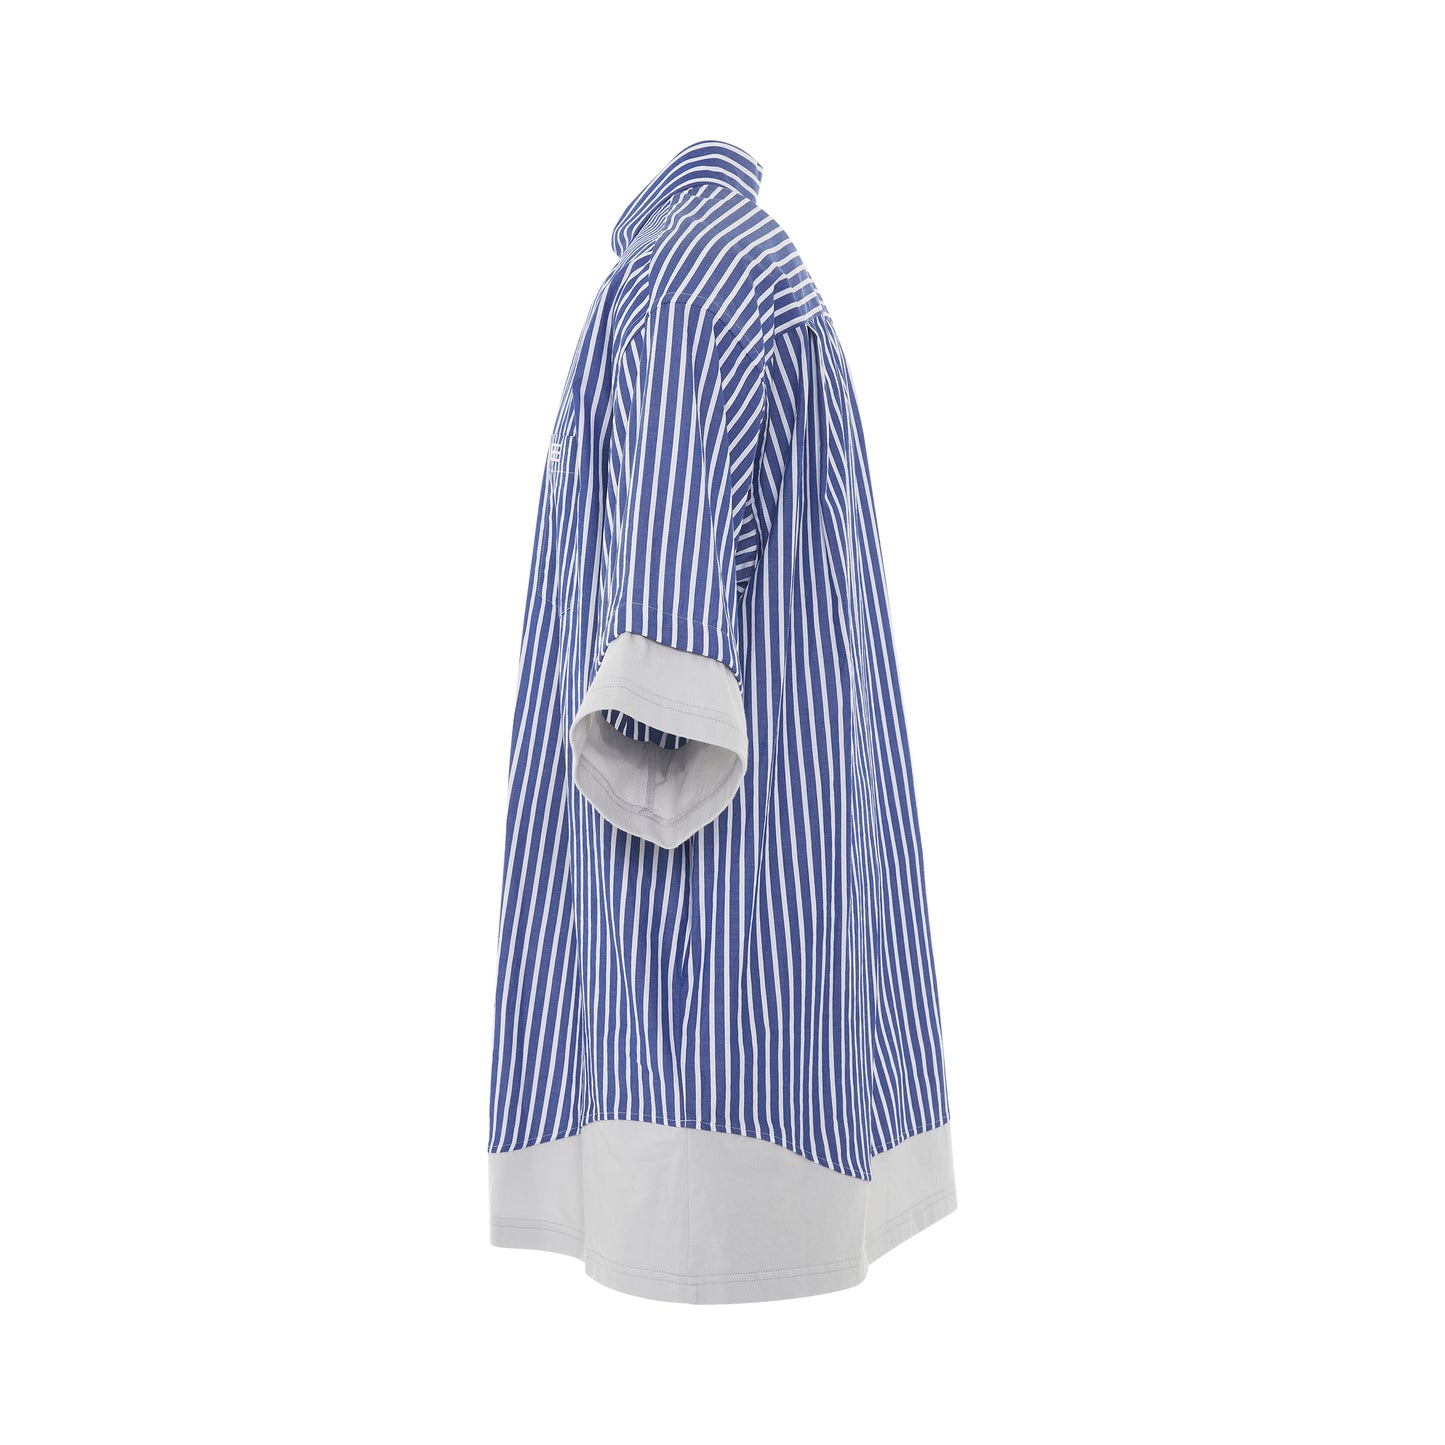 Crinkled Stripe Poplin Layered Shirt in Blue/White